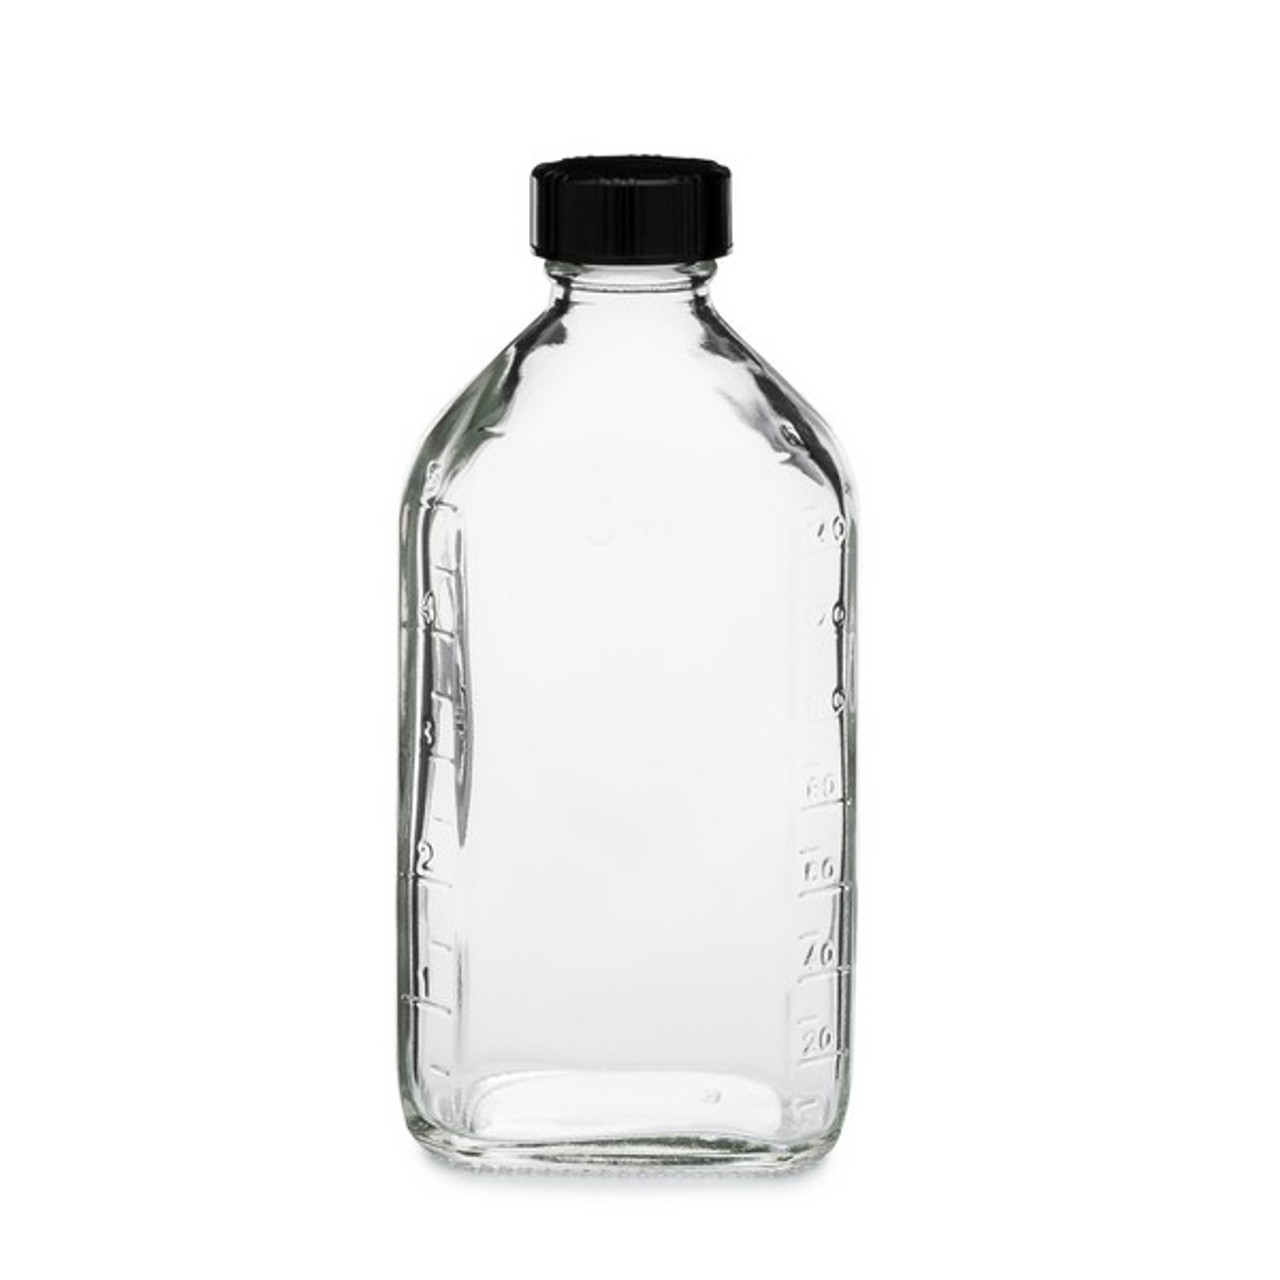 24 oz Clear Glass Beverage Bottles (Bulk), Caps NOT Included